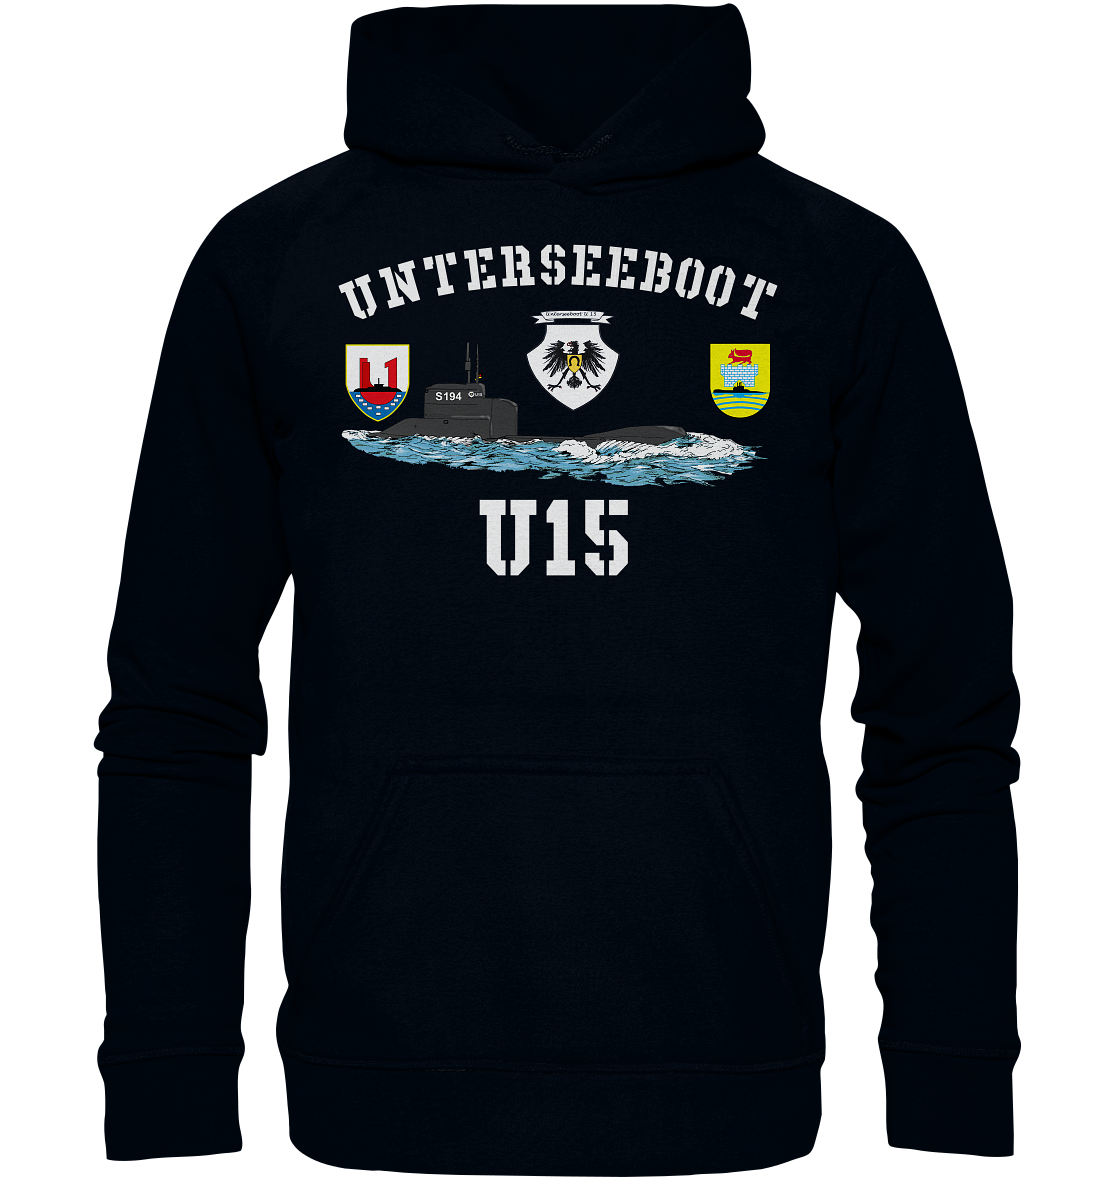 Unterseeboot U15 - Basic Unisex Hoodie XL